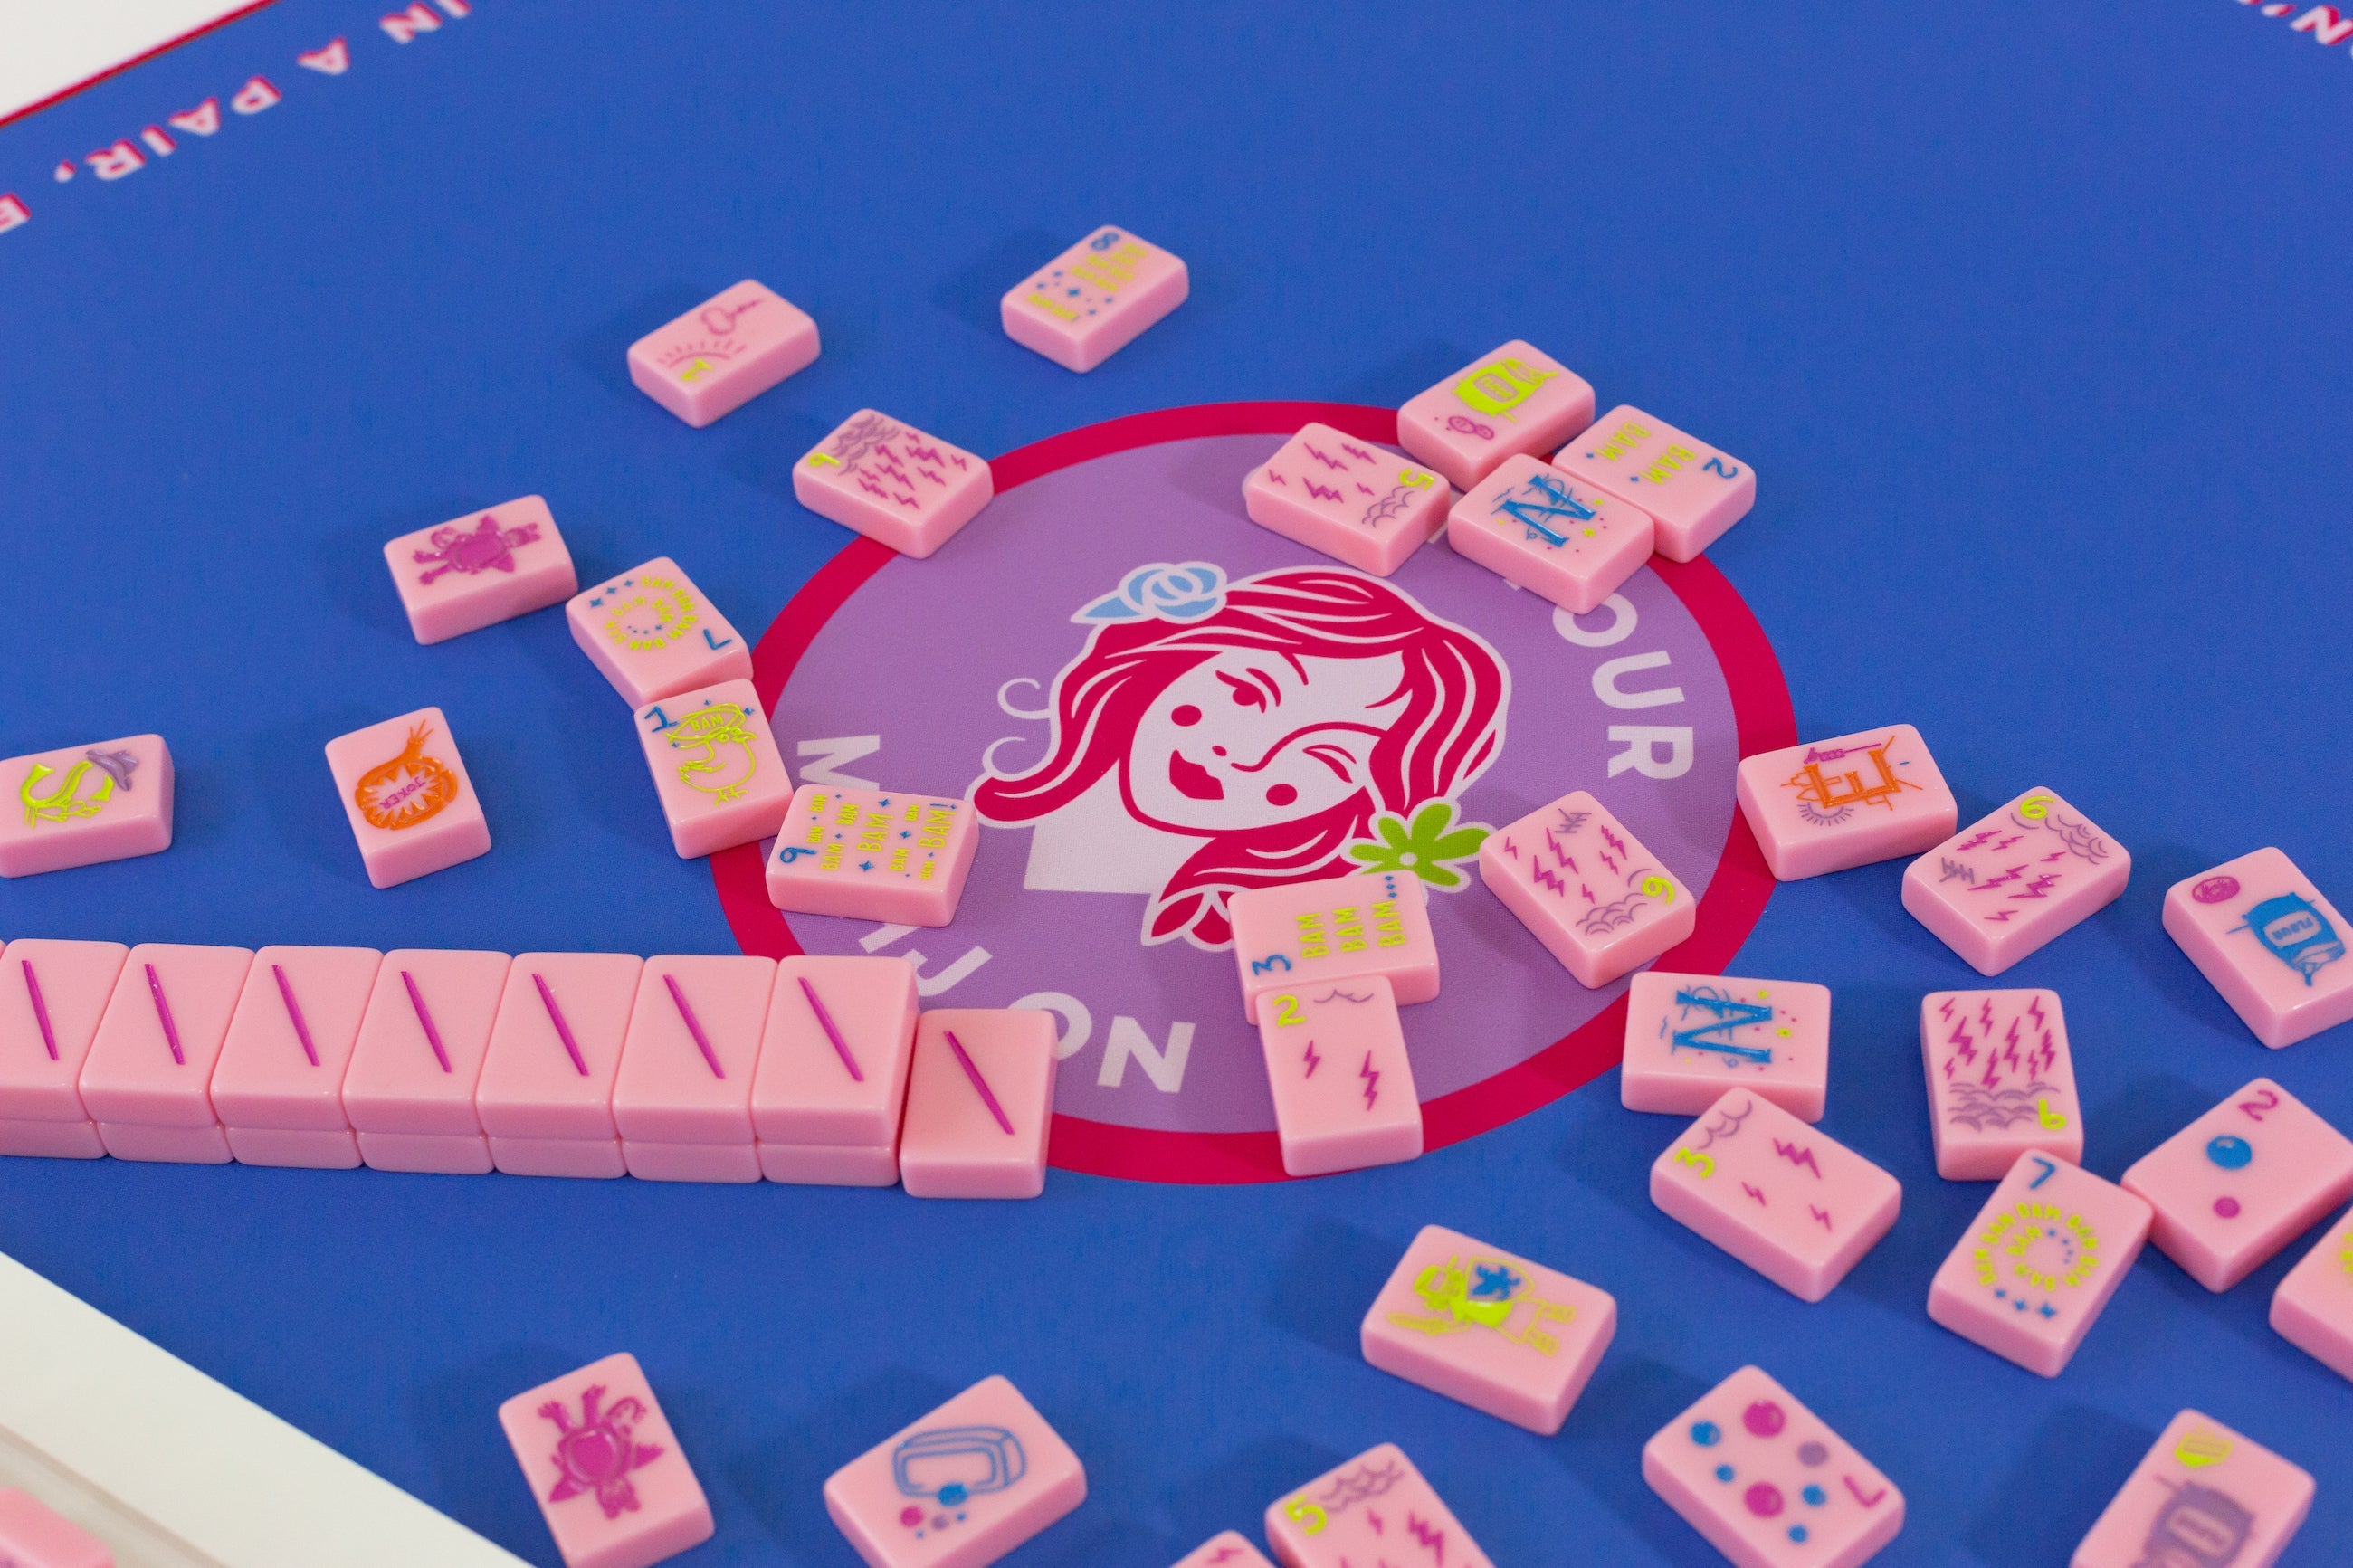 The Cheeky Line - Mahjong Tile Set - Petal Pink Limited Release